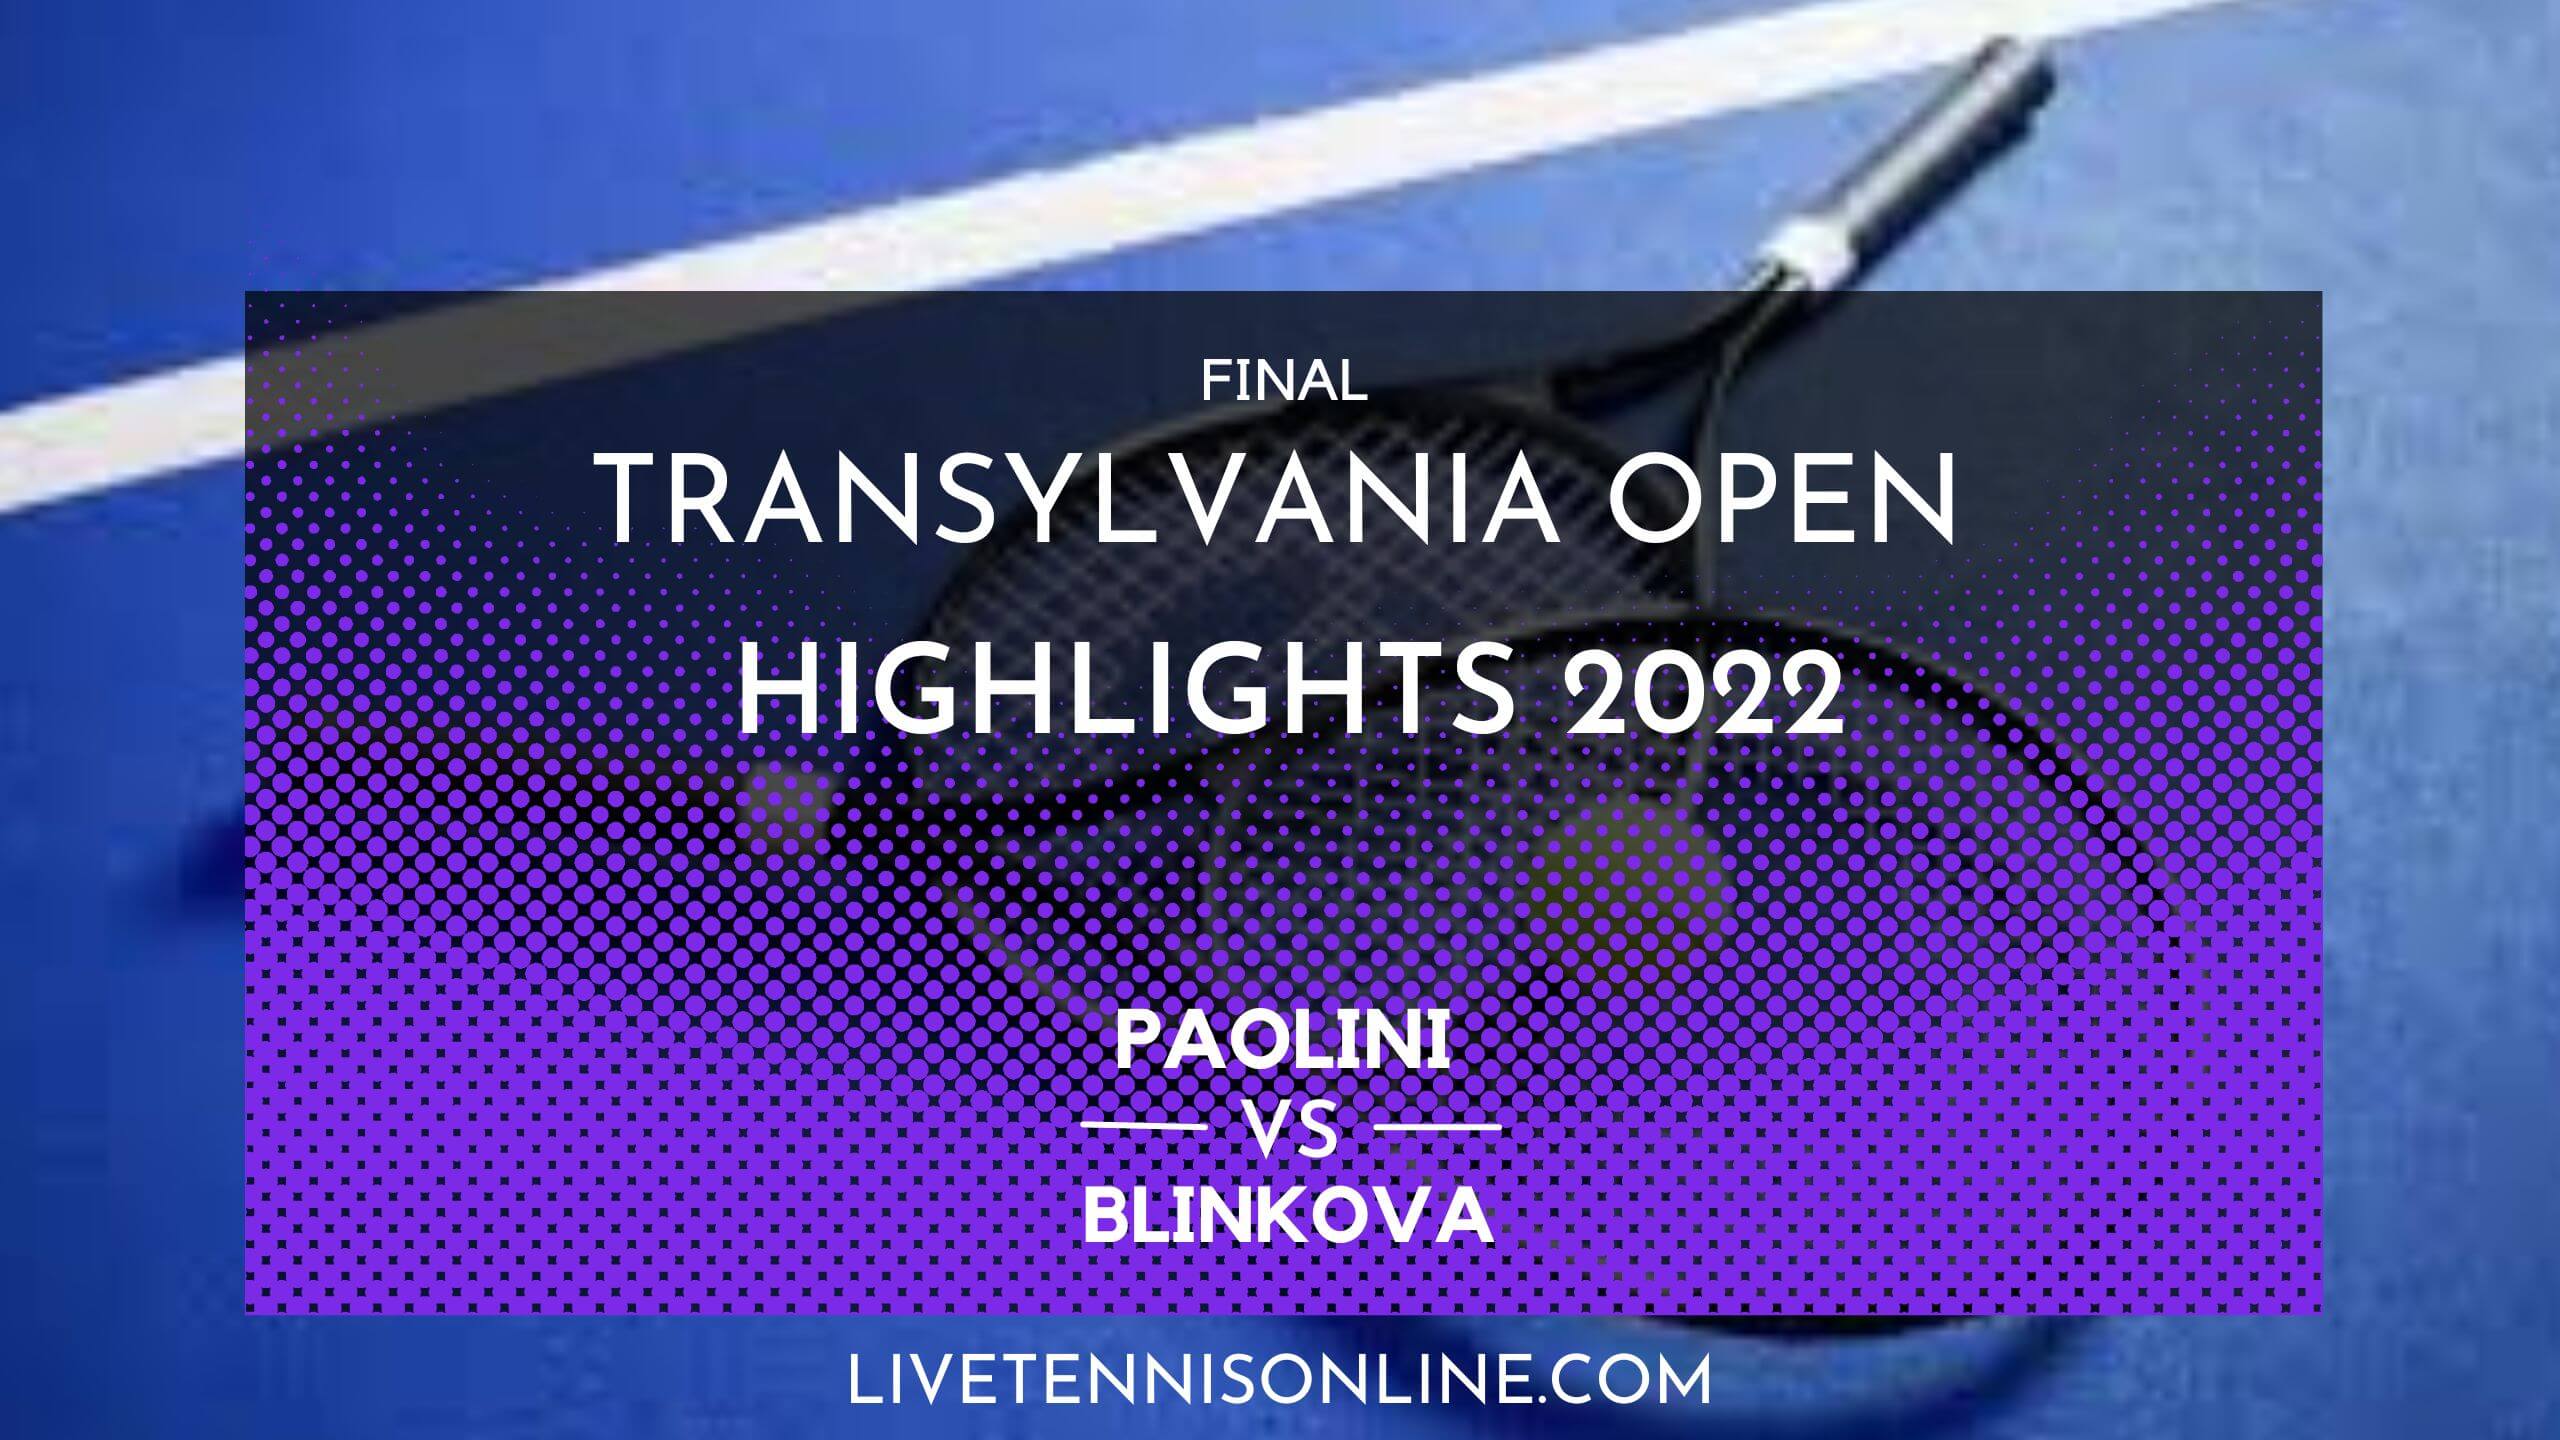 Paolini Vs Blinkova Final Highlights 2022 Transylvania Open